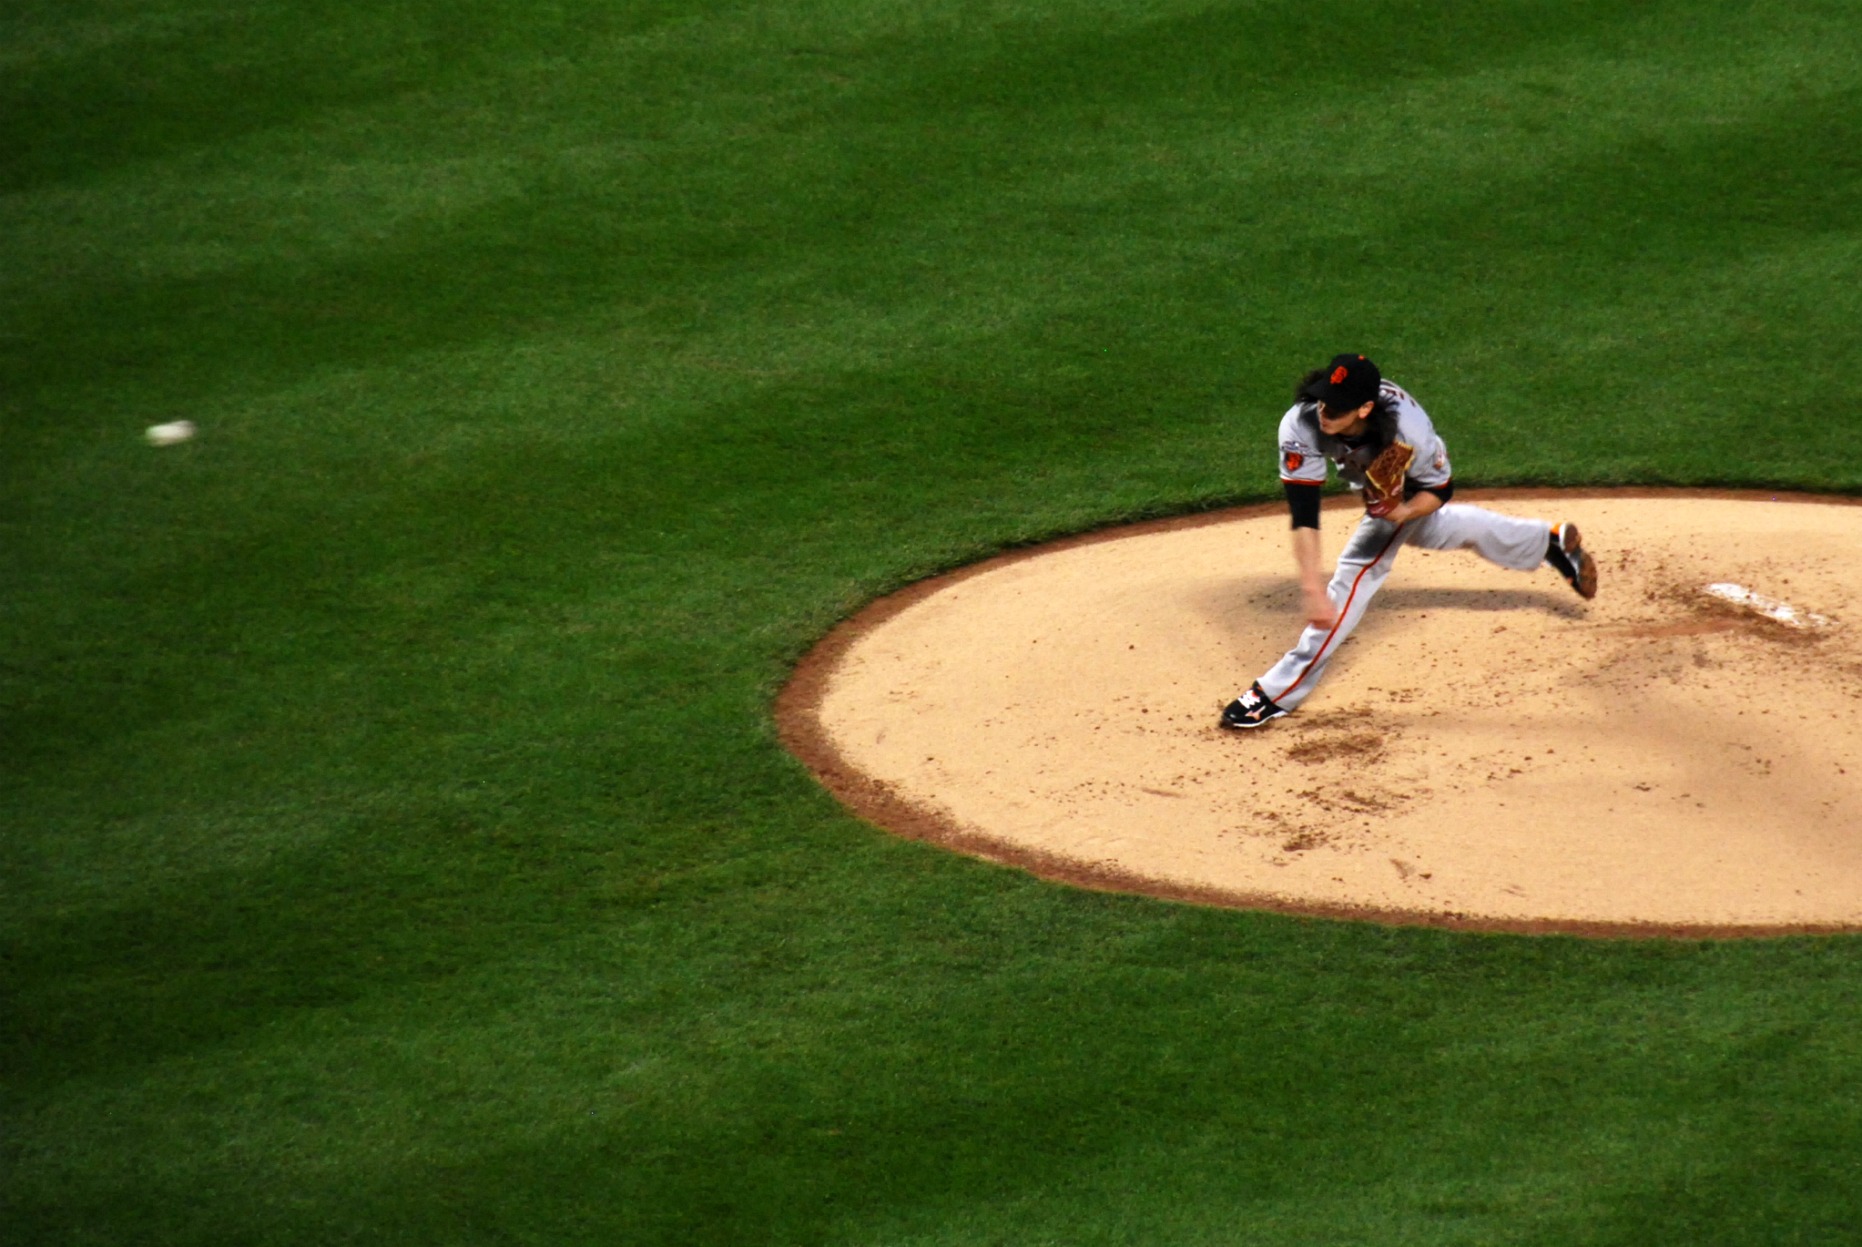 a baseball player pitching a ball in a baseball field